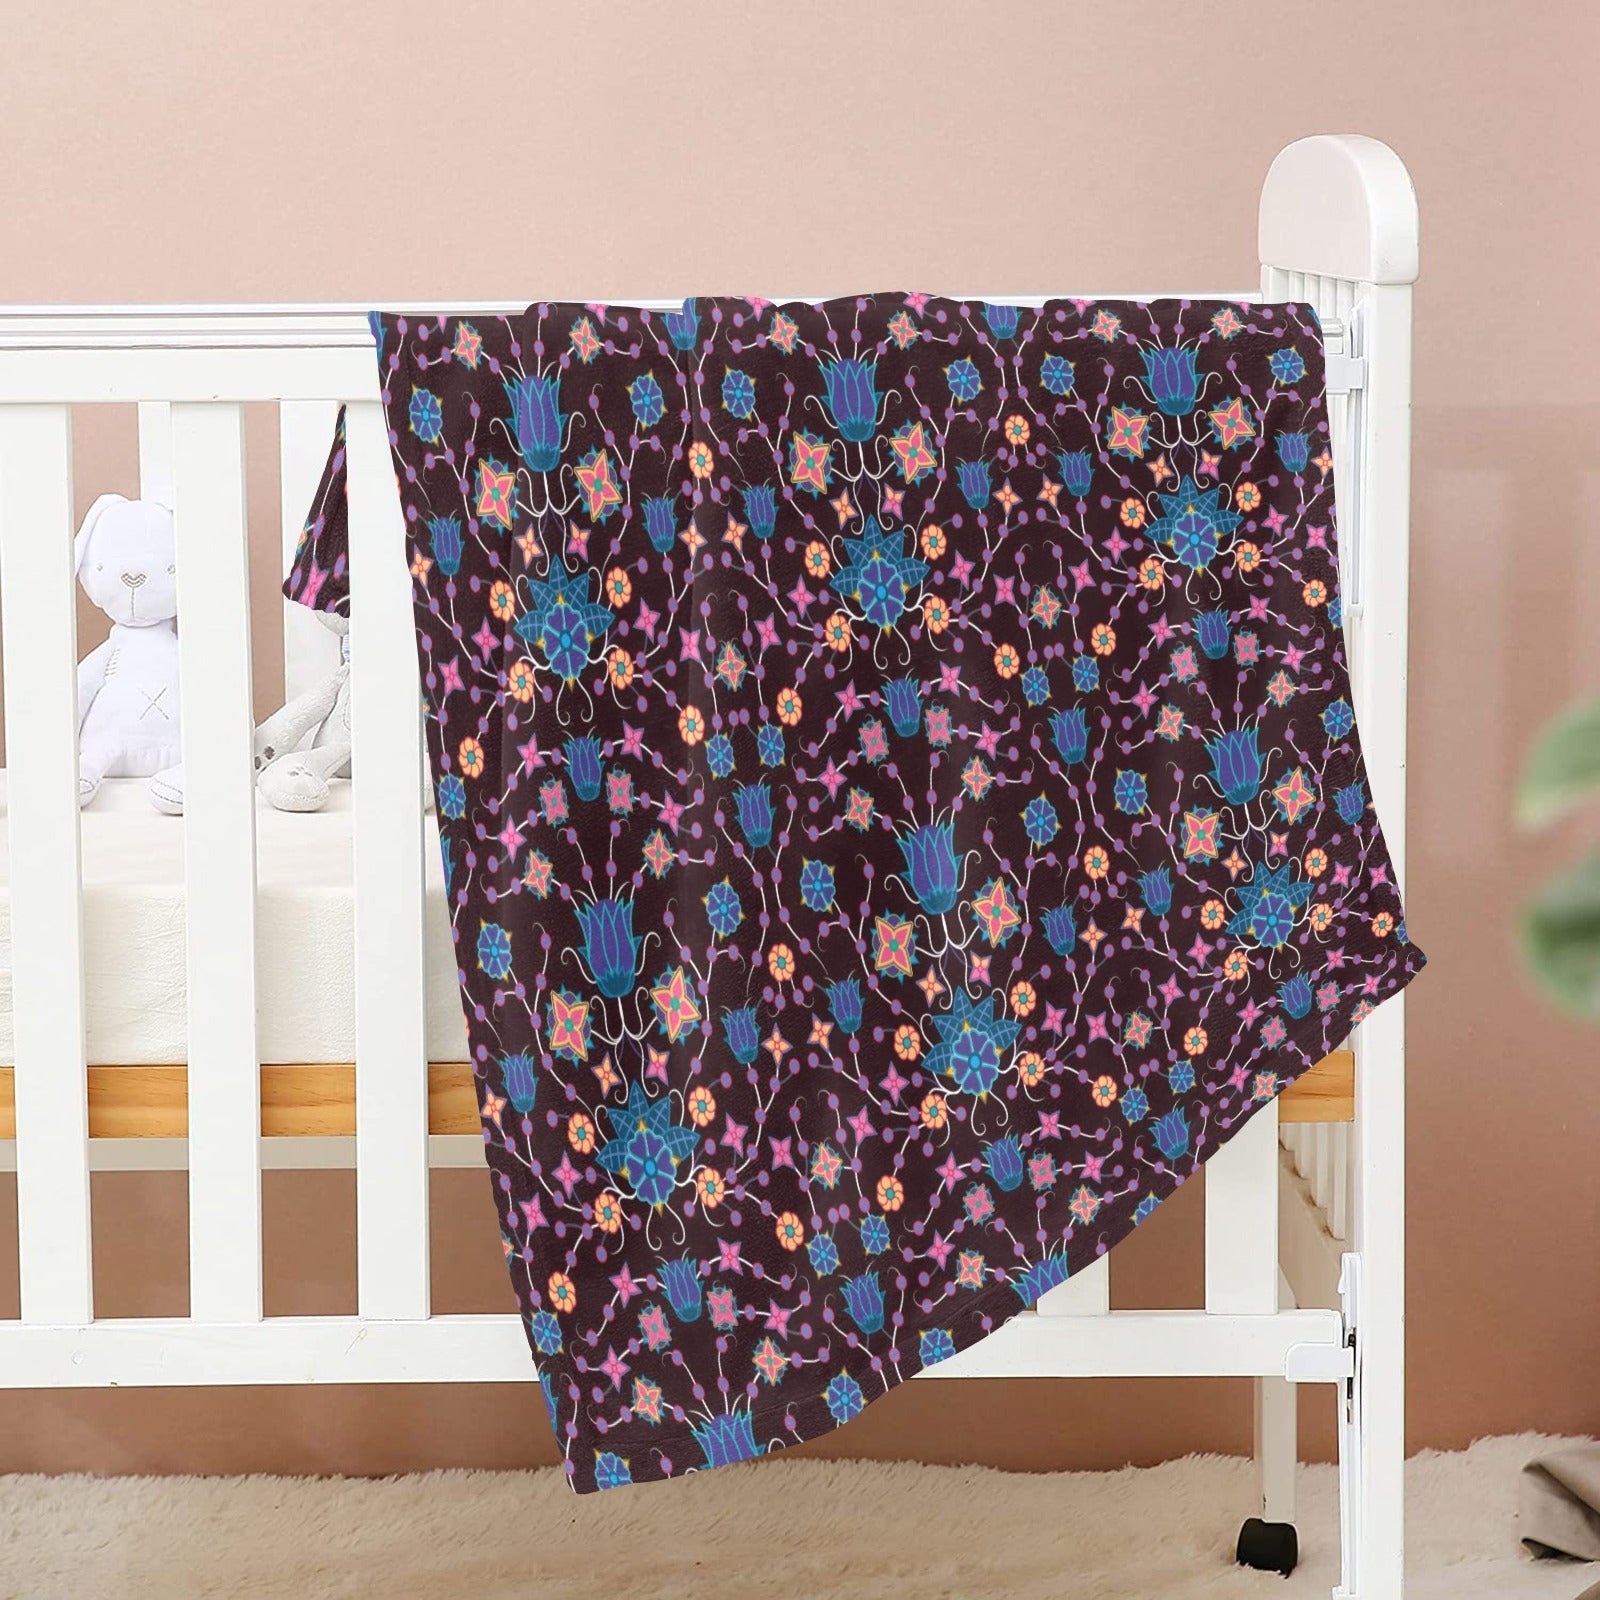 Floral Damask Purple Baby Blanket 40"x50" Baby Blanket 40"x50" e-joyer 